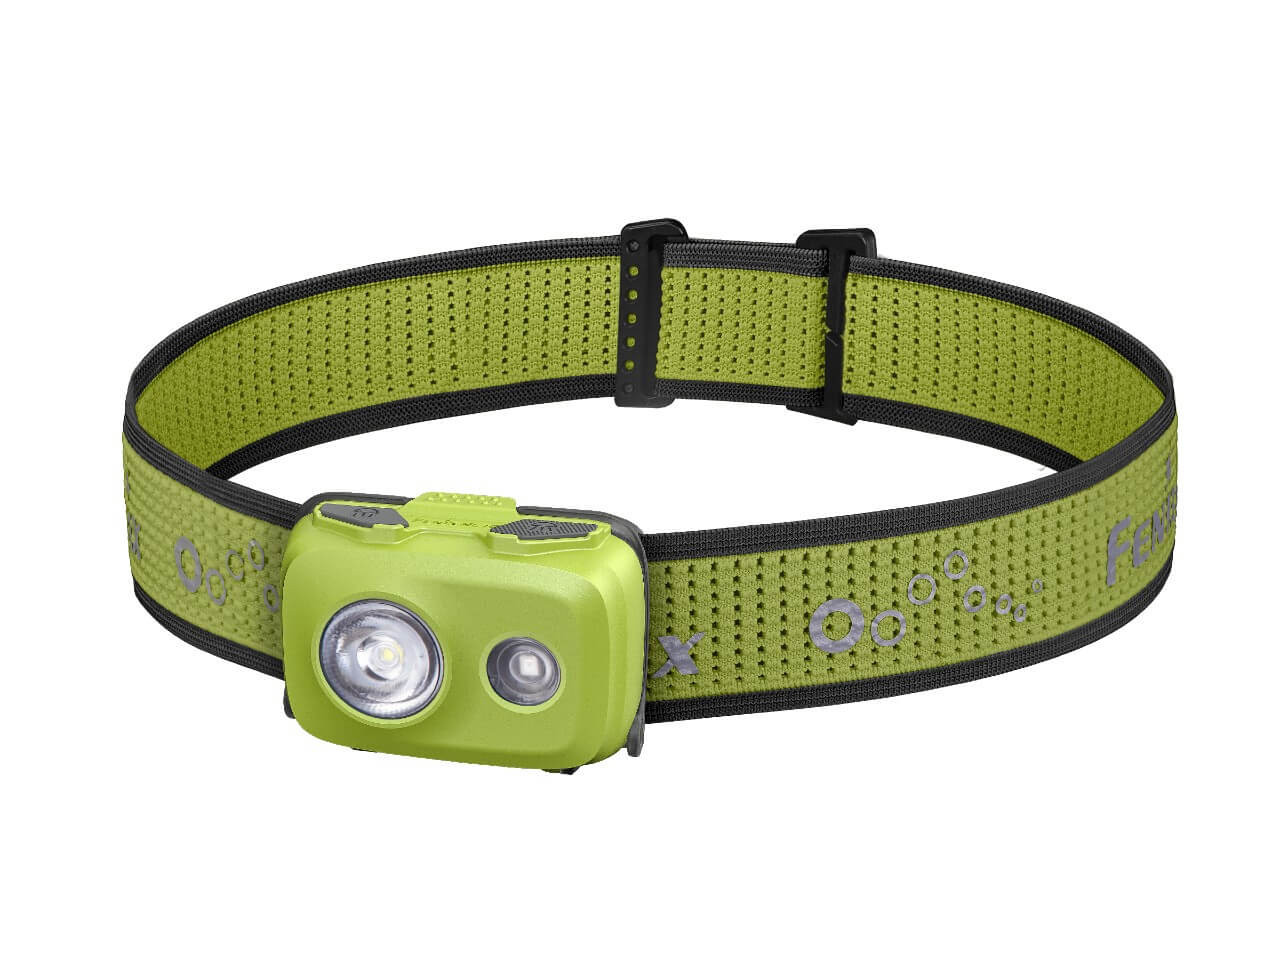 Fenix Flashlights Lightweight Outdoor Hiking Headlamp (FXHL16-Green) Green Battery Operated LED, 450 Lumens